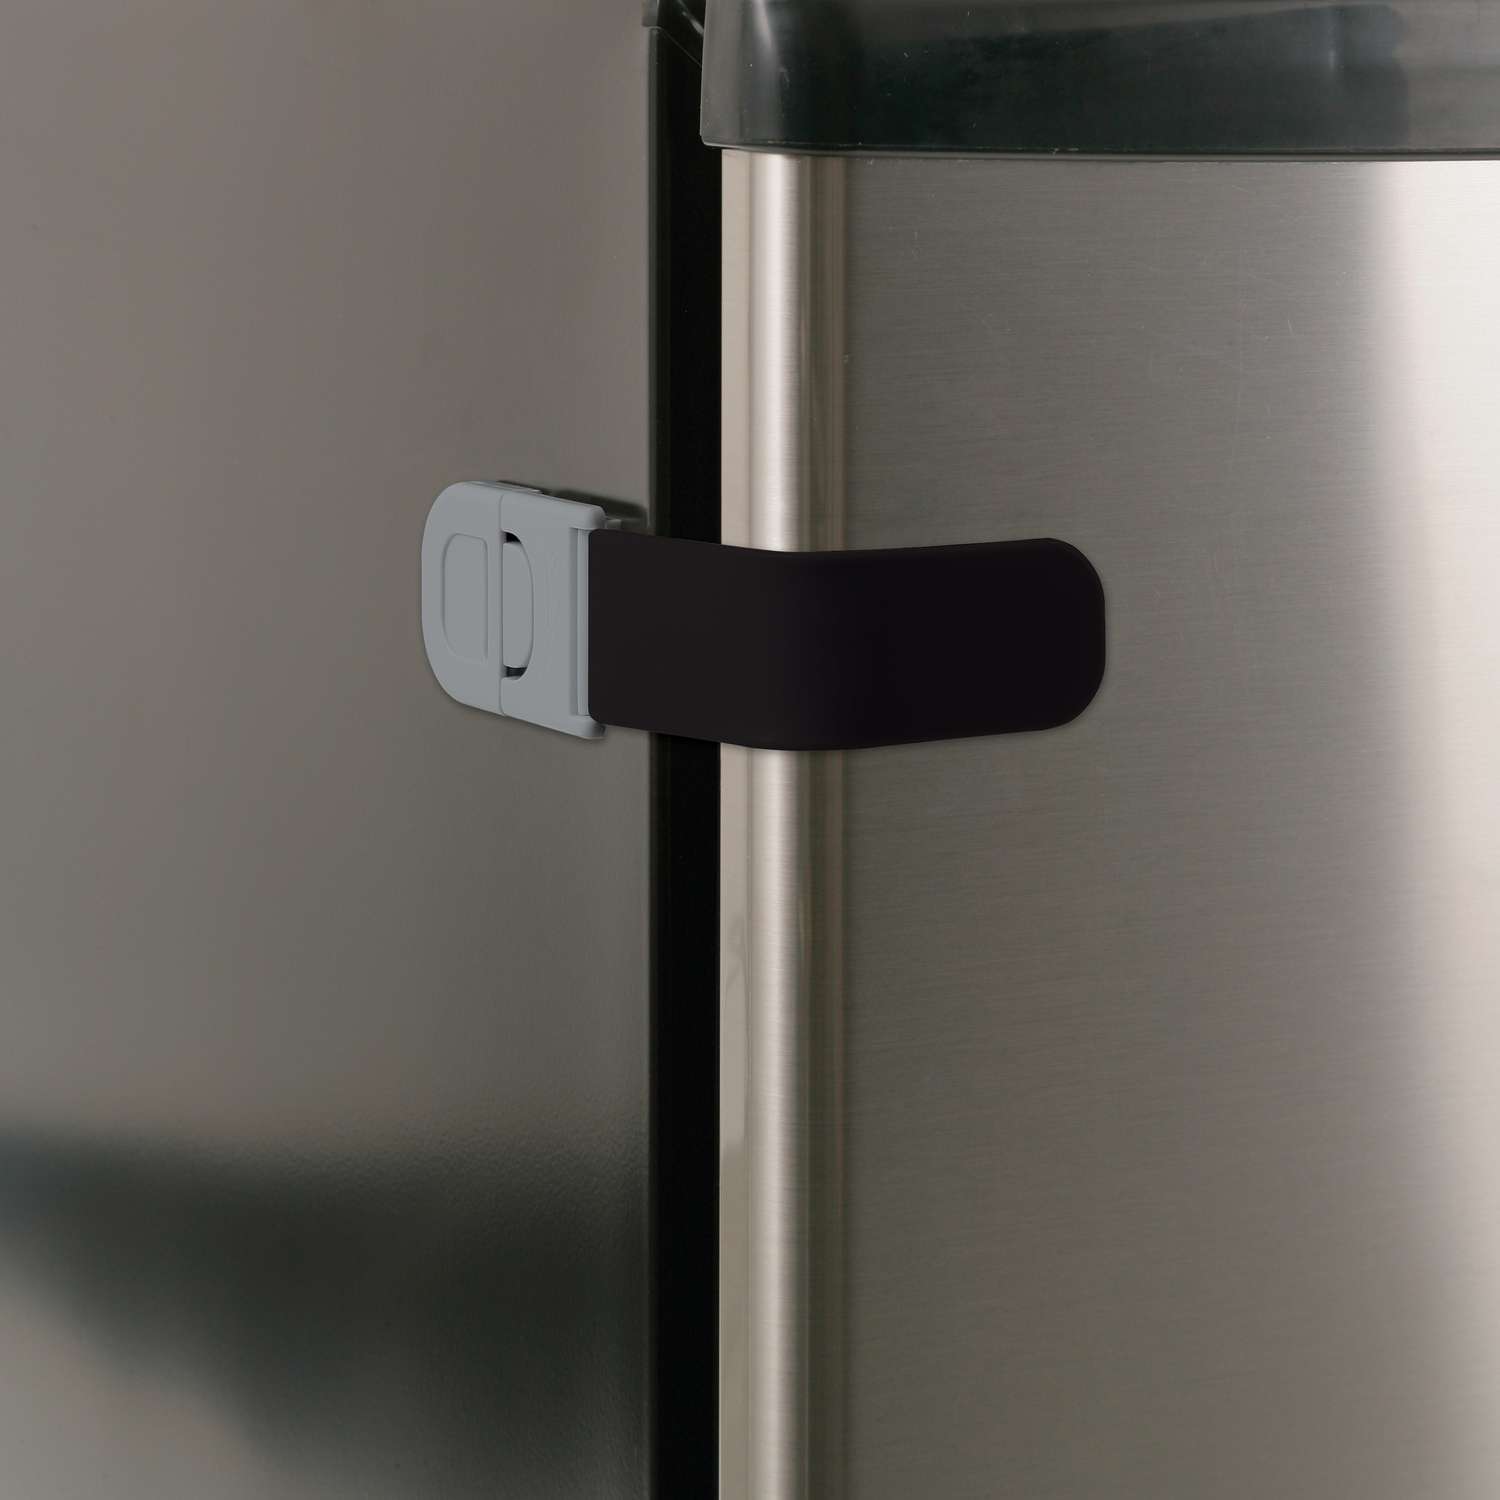 1pc Stainless Steel Child safety Refrigerator Door Lock Security Window Lock  Cabinet Lock Fridge Freezer Lock